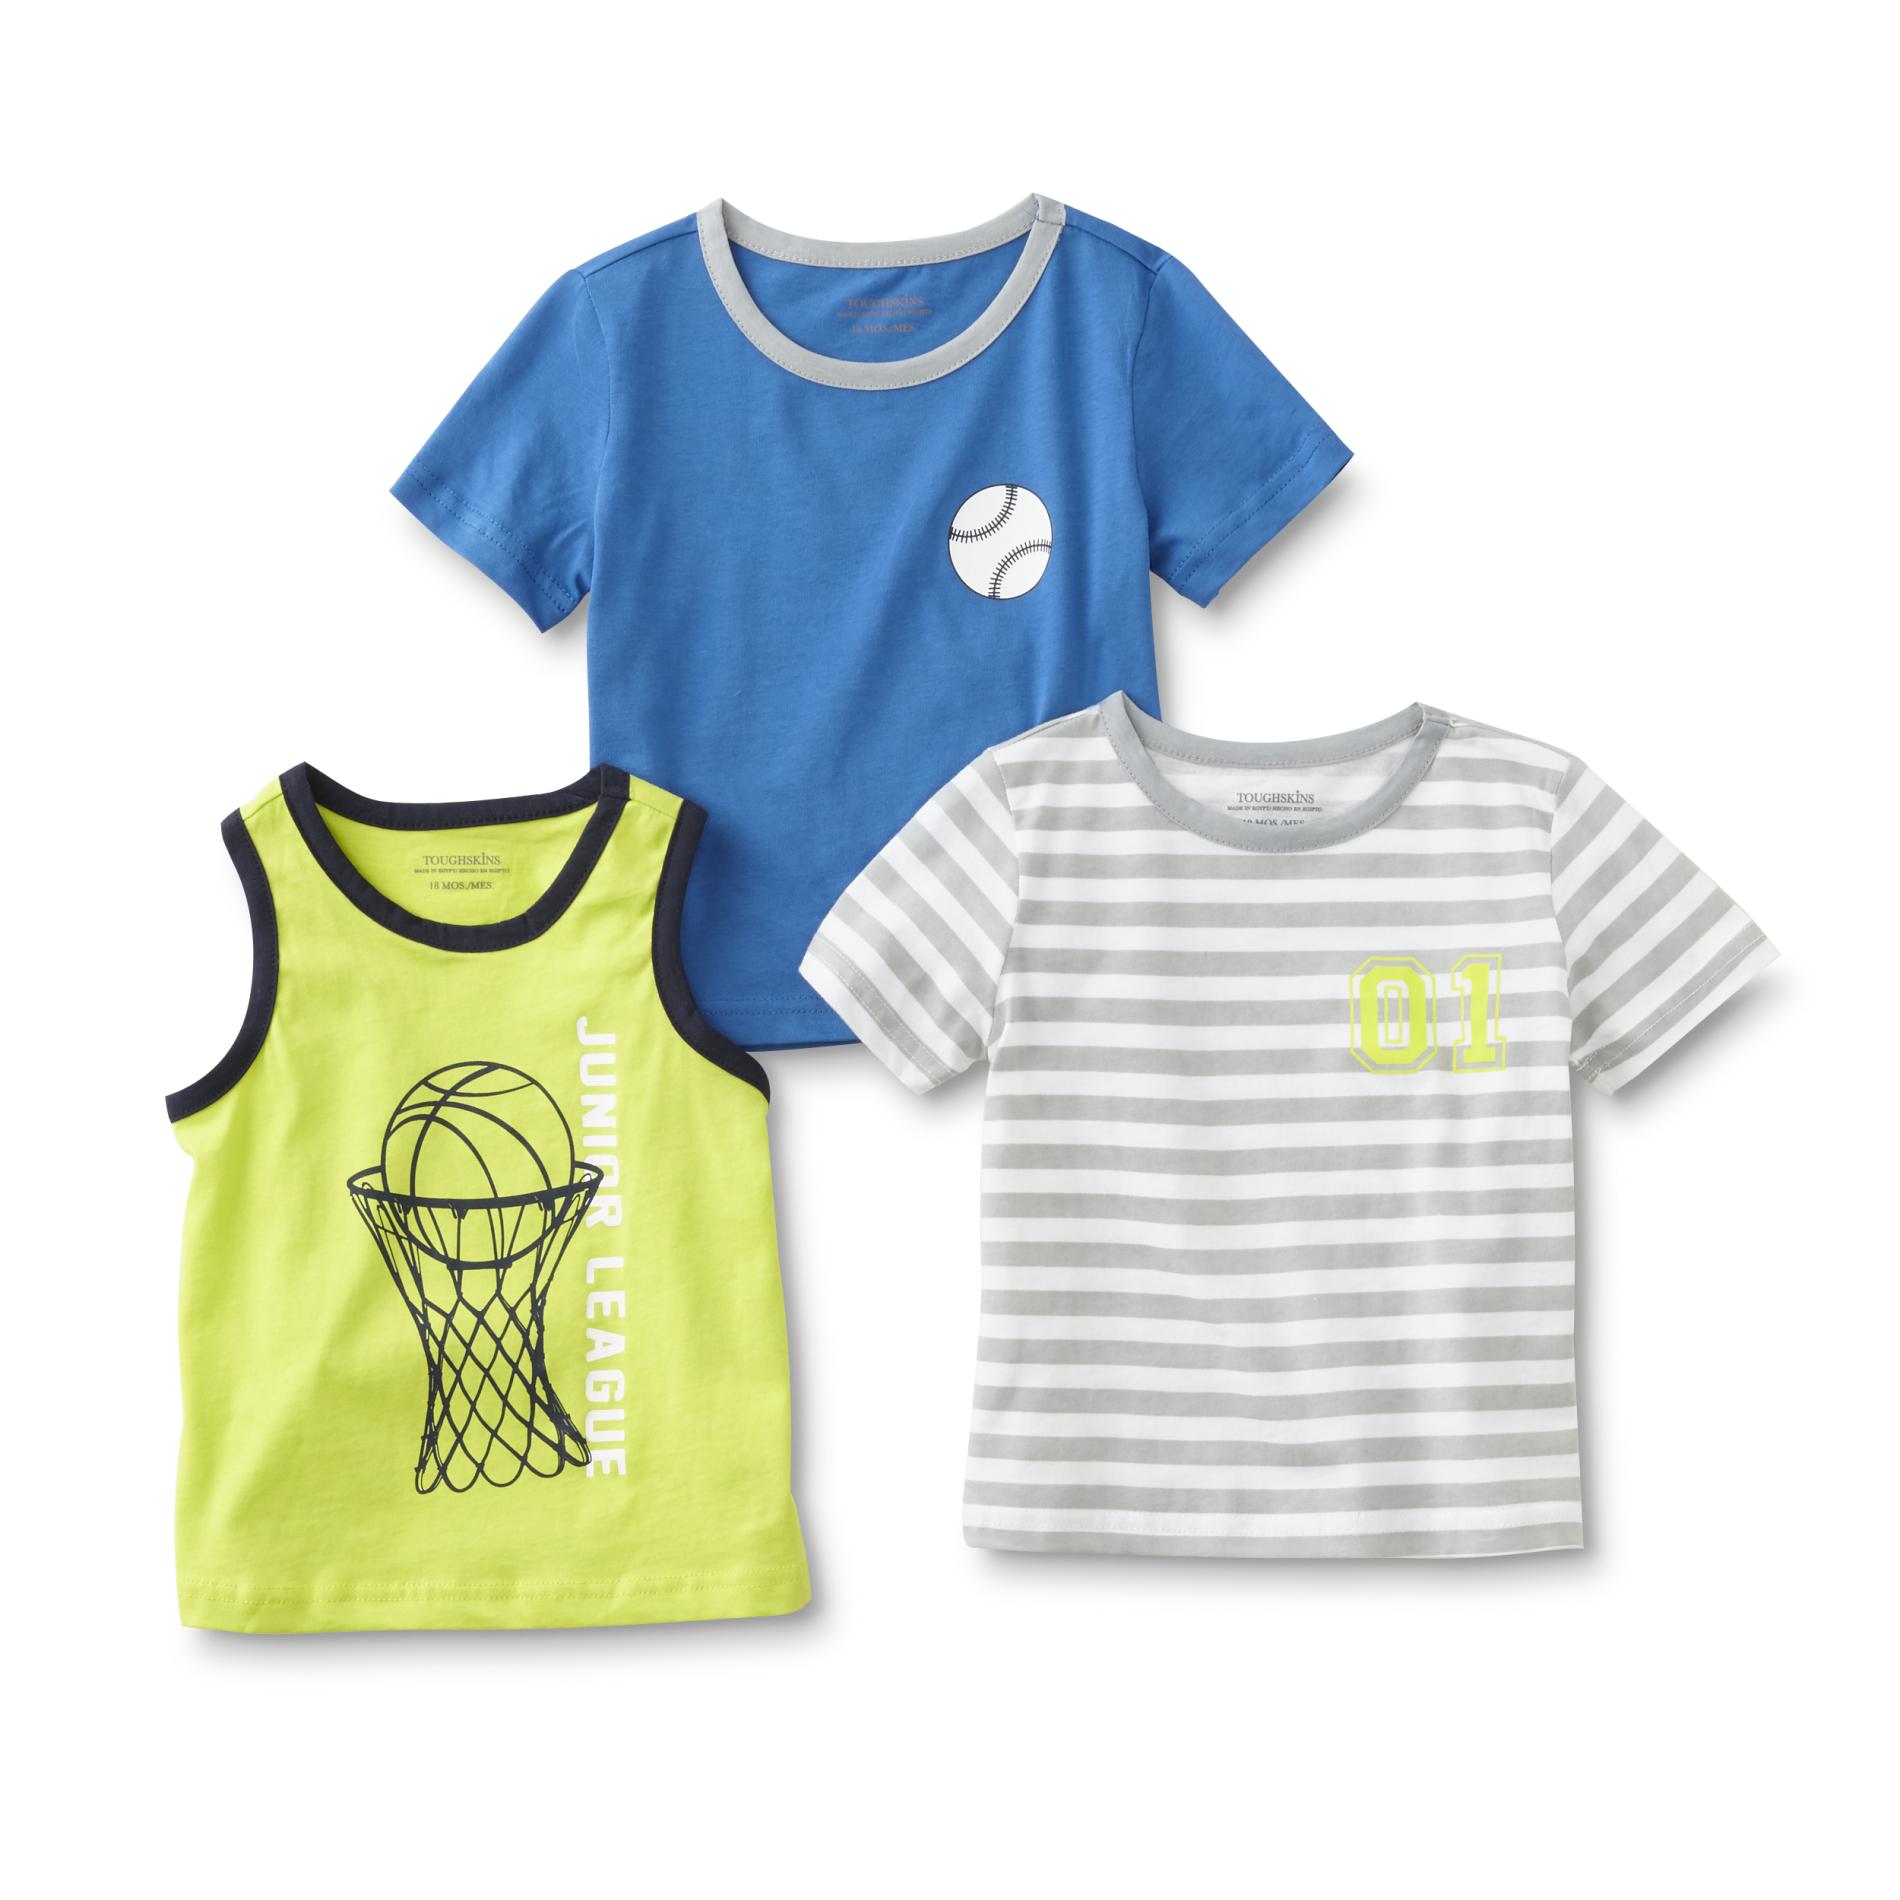 Toughskins Infant & Toddler Boys' Graphic Tank Top & 2 T-Shirts - Baseball & Basketball